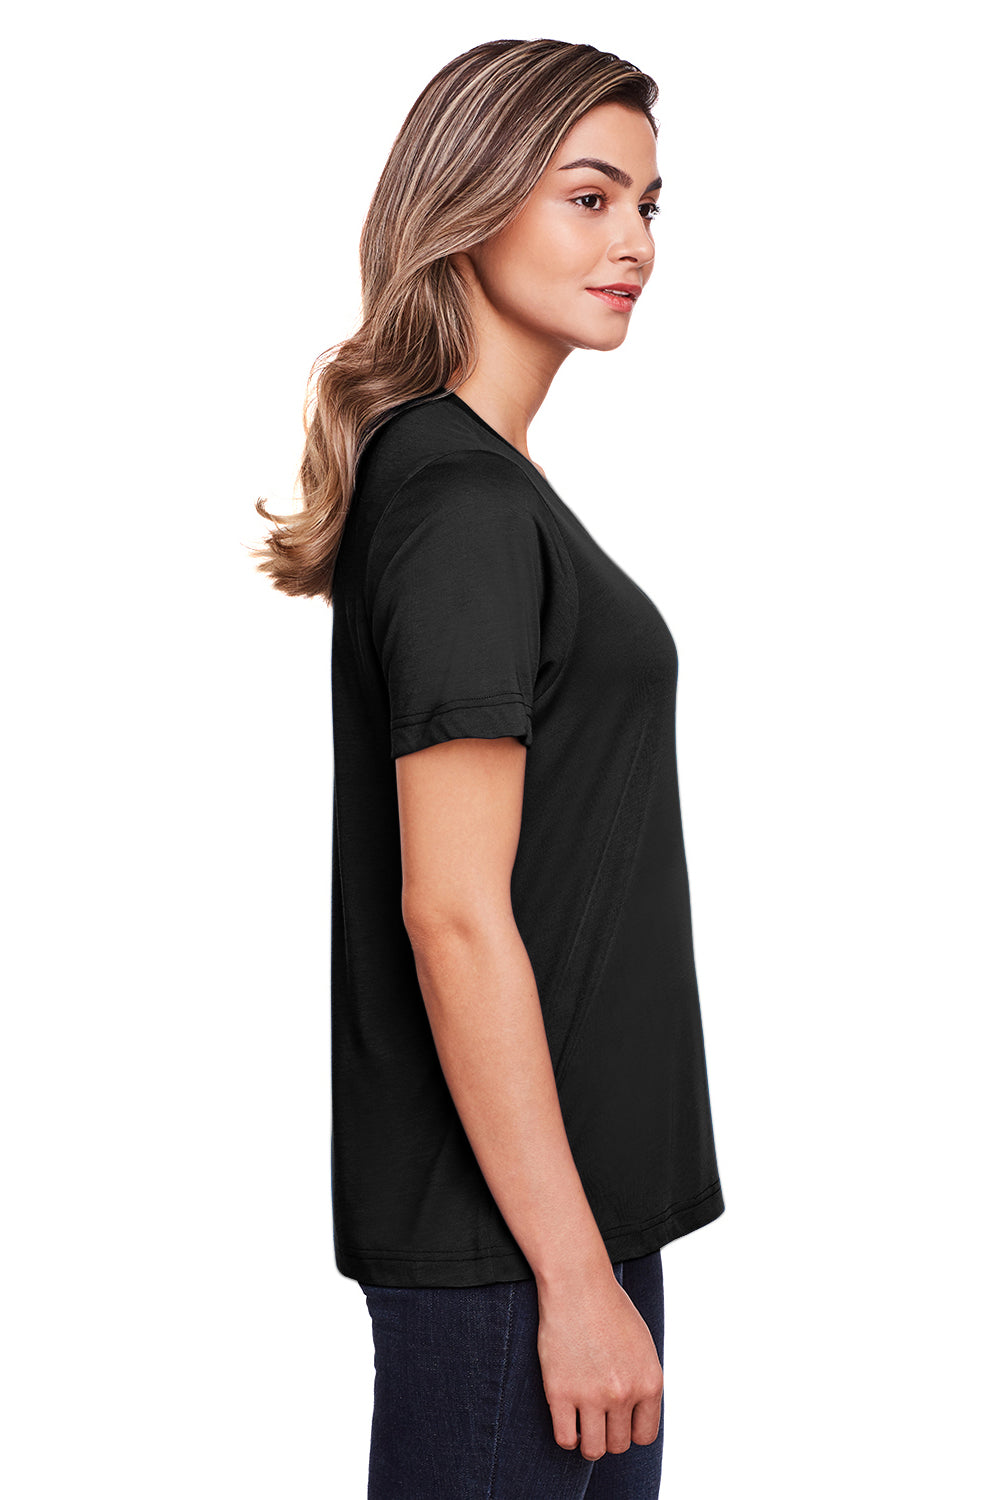 Core 365 CE111W Womens Fusion ChromaSoft Performance Moisture Wicking Short Sleeve Scoop Neck T-Shirt Black Side